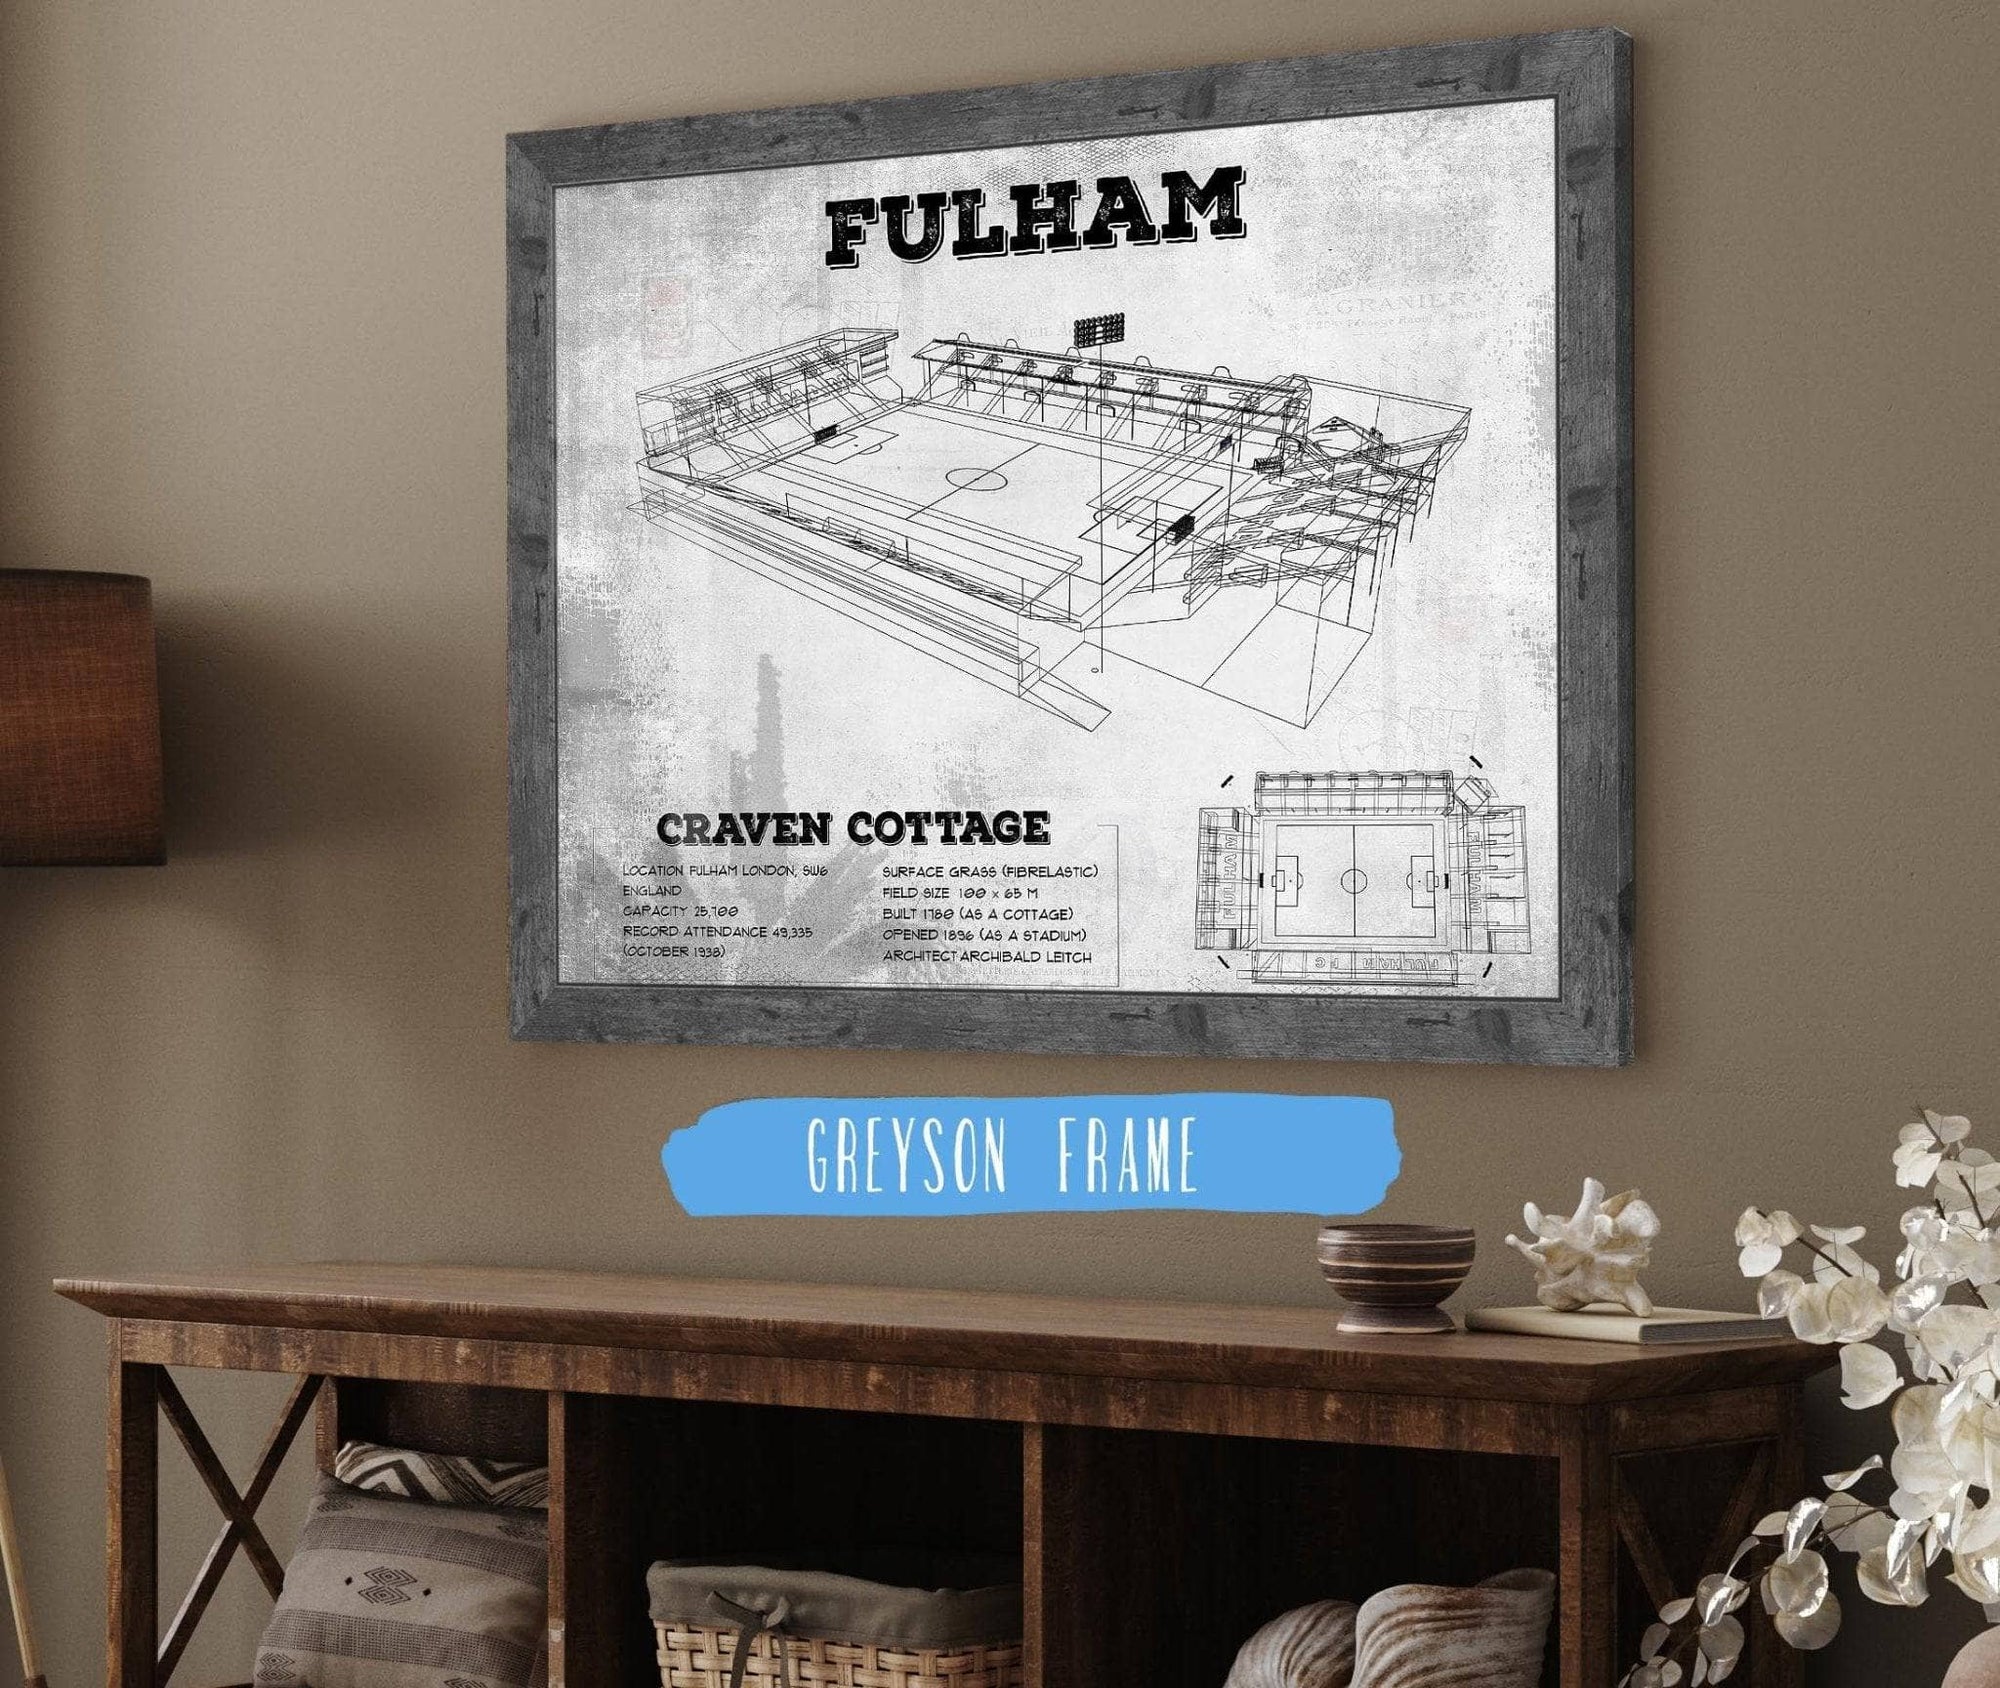 Cutler West Soccer Collection 14" x 11" / Greyson Frame Fulham Football Club Craven Cottage Vintage Soccer Print 737087842_66712